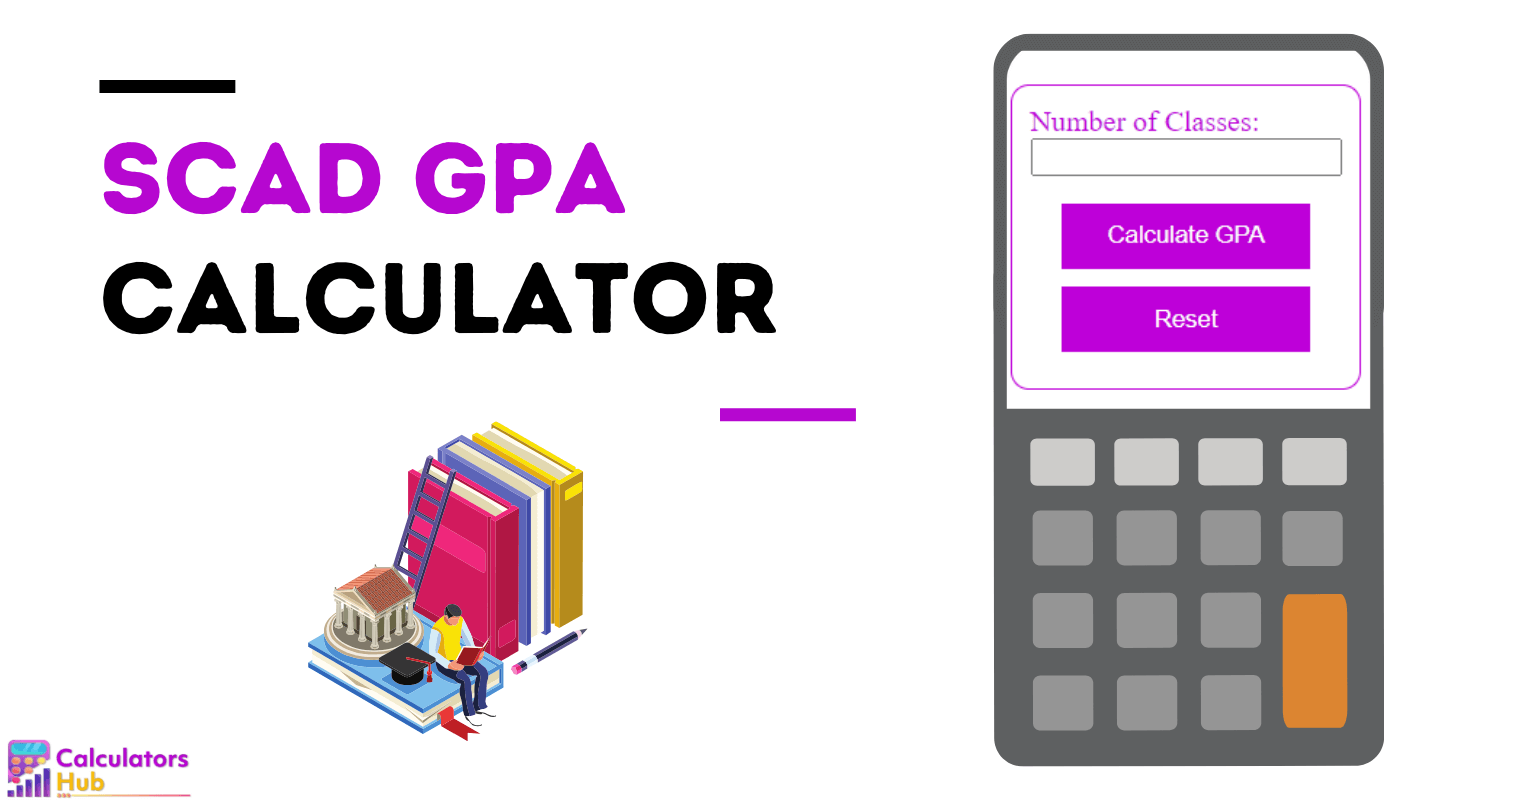 SCAD GPA Calculator